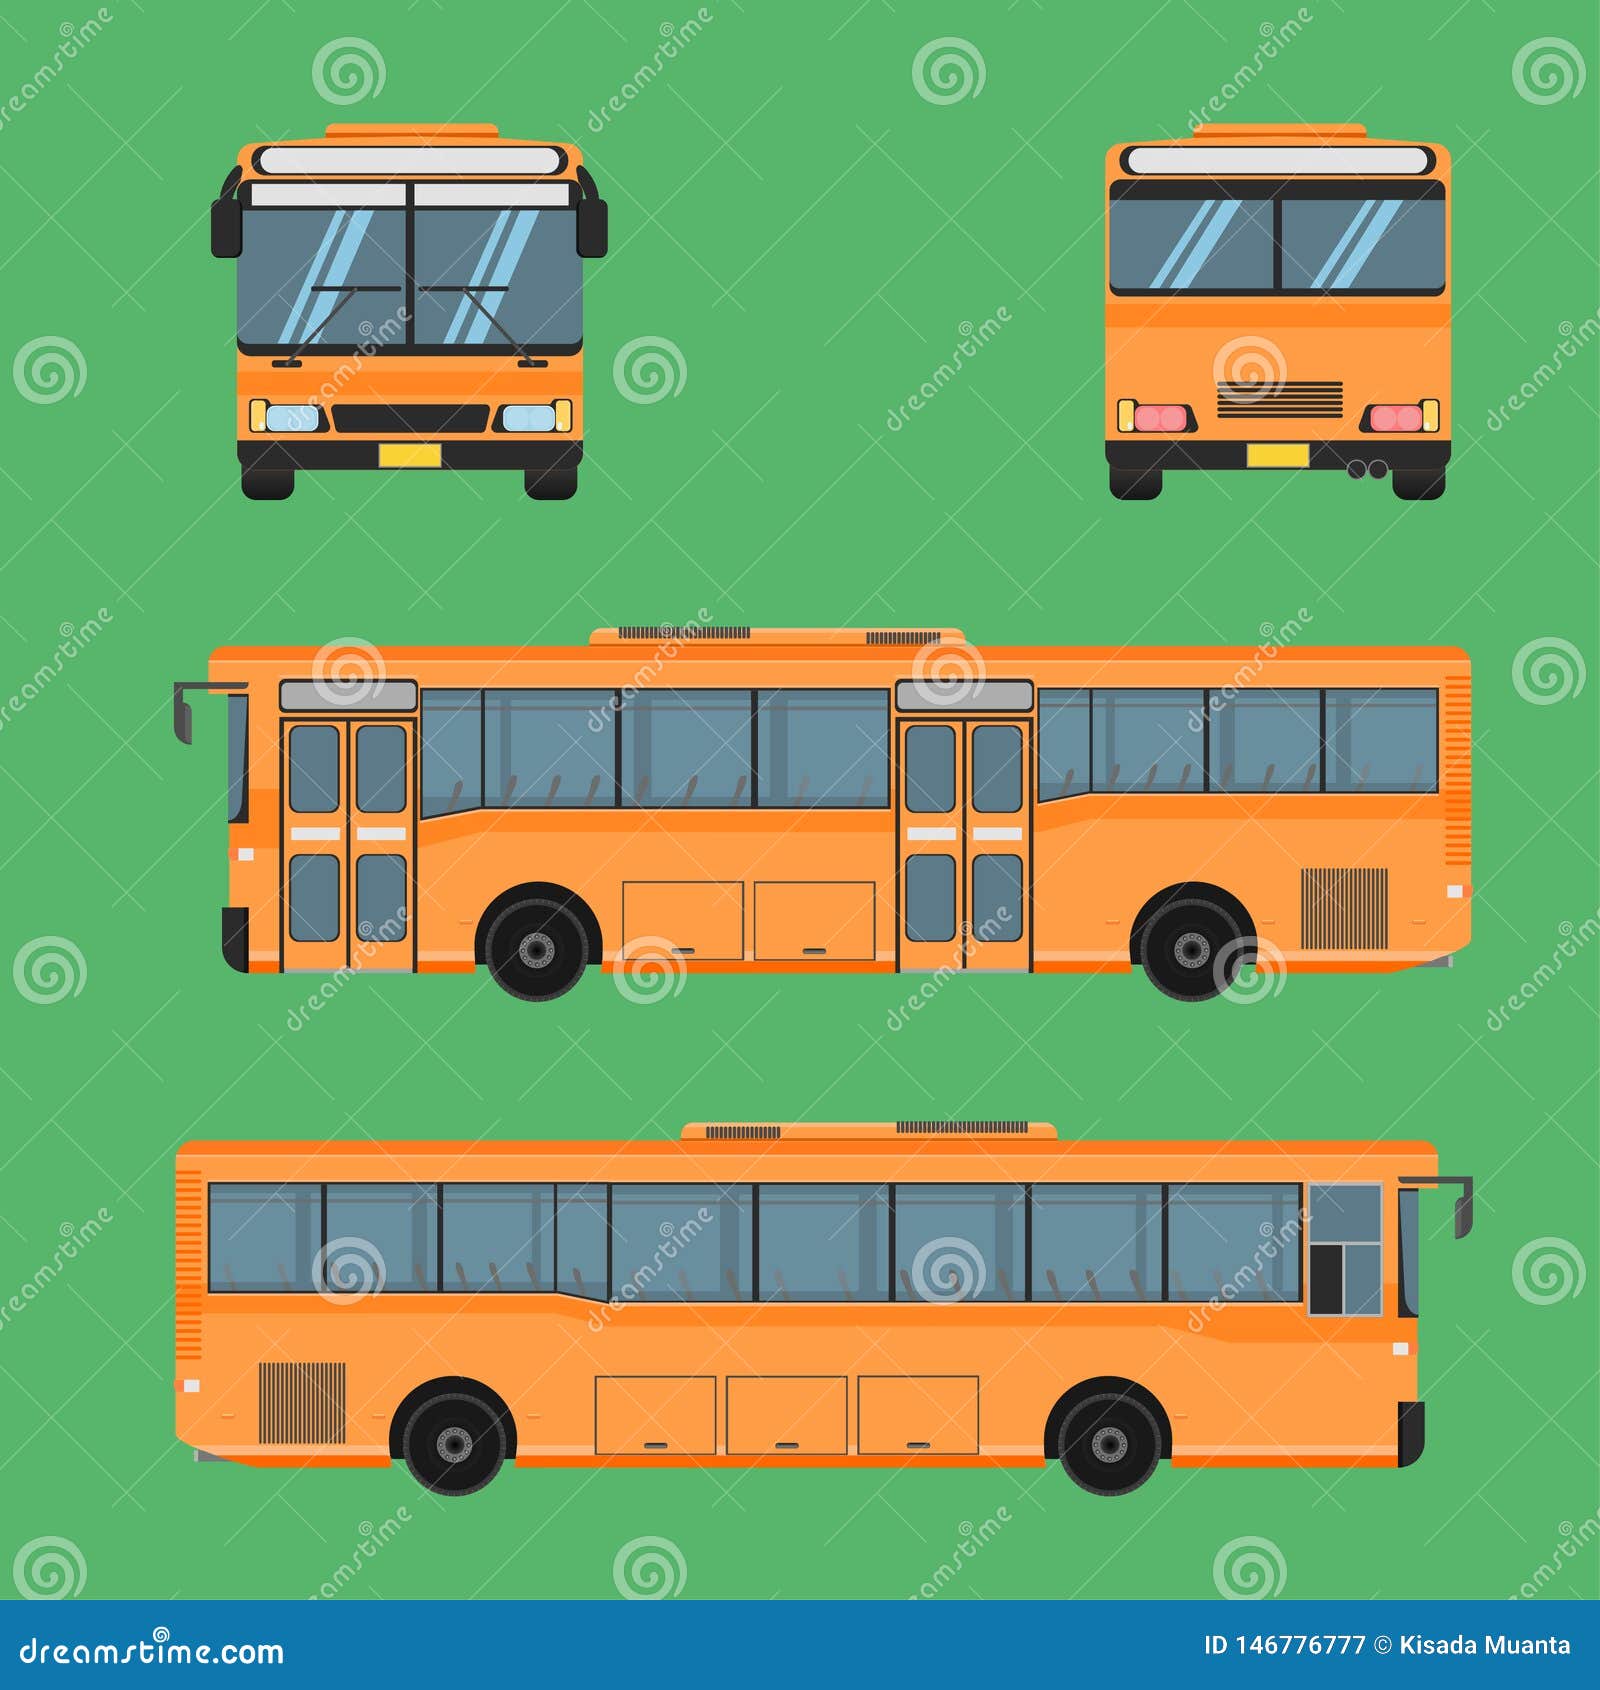 https://thumbs.dreamstime.com/z/thai-bus-orange-transport-auto-fahrer-fahrgast-autobus-omnibus-schiene-bank-stuhl-hocker-sessel-sitz-matratze-bo-polster-hassock-146776777.jpg